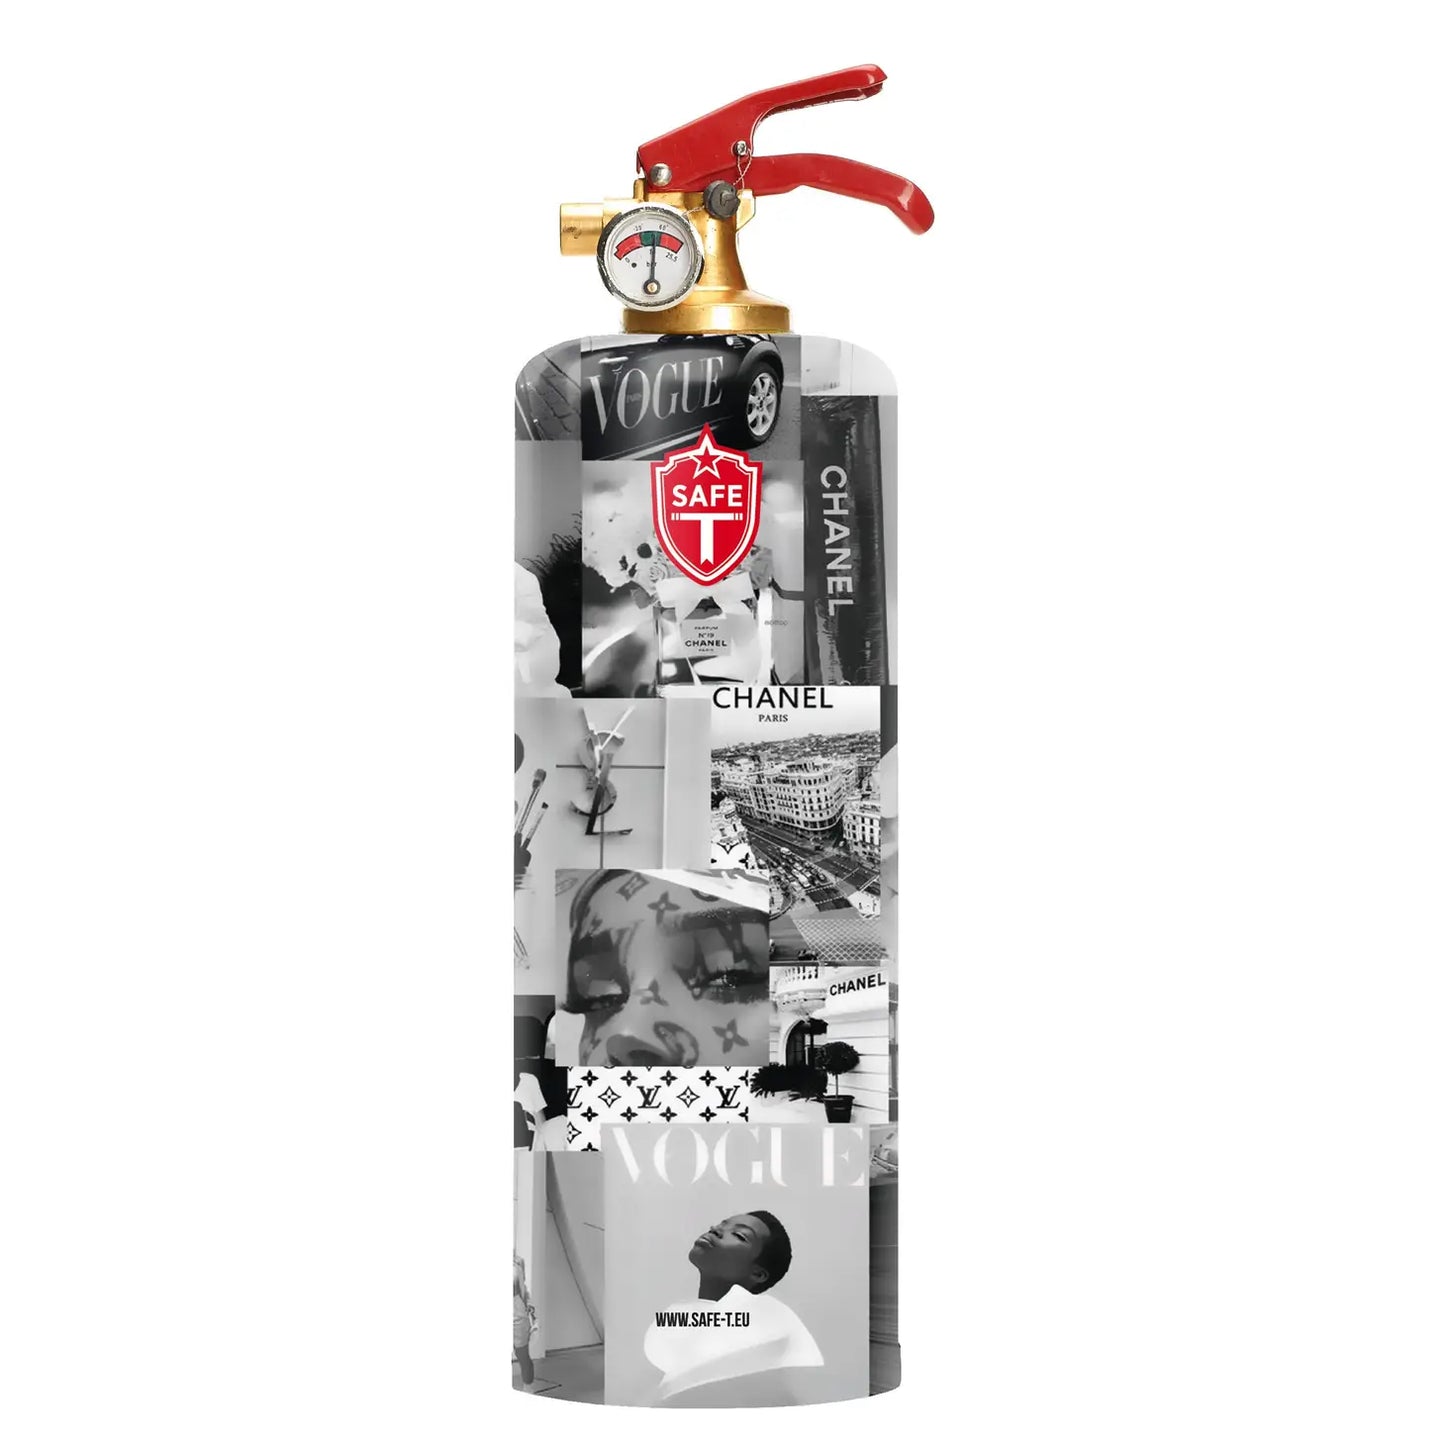 Design Fire Extinguishers